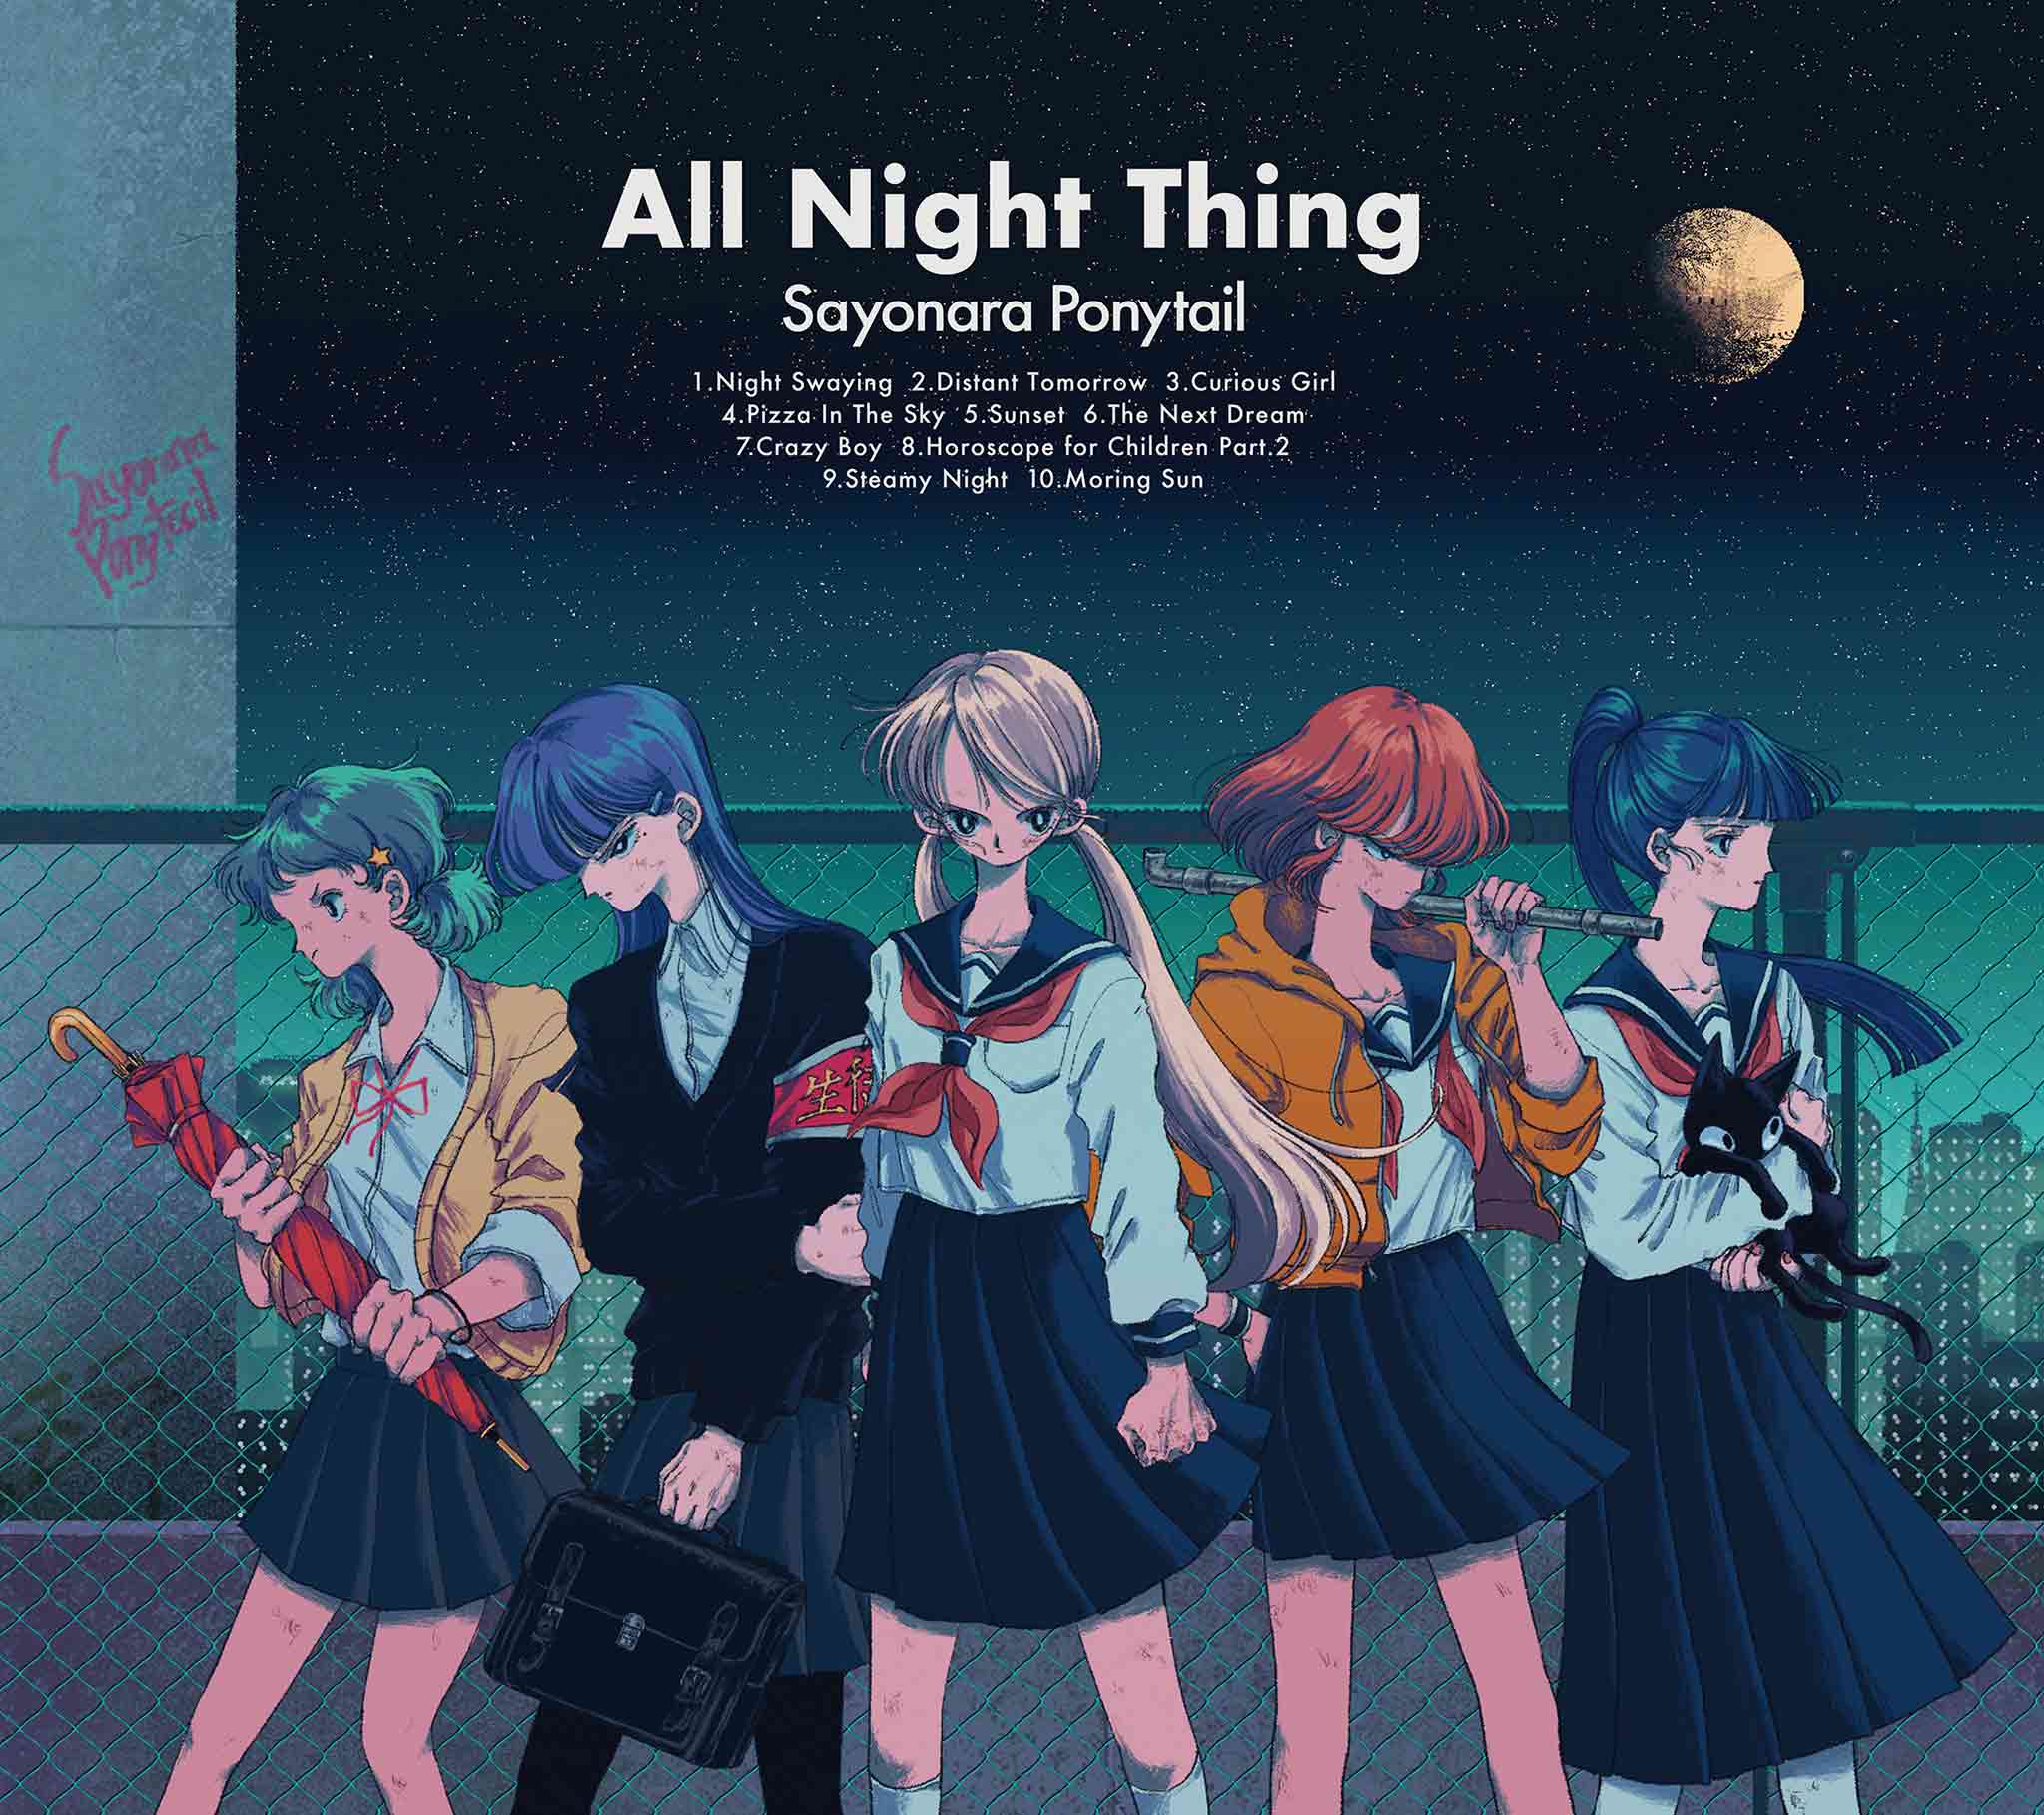 All Night Thing - リリース情報 - P-VINE, Inc.